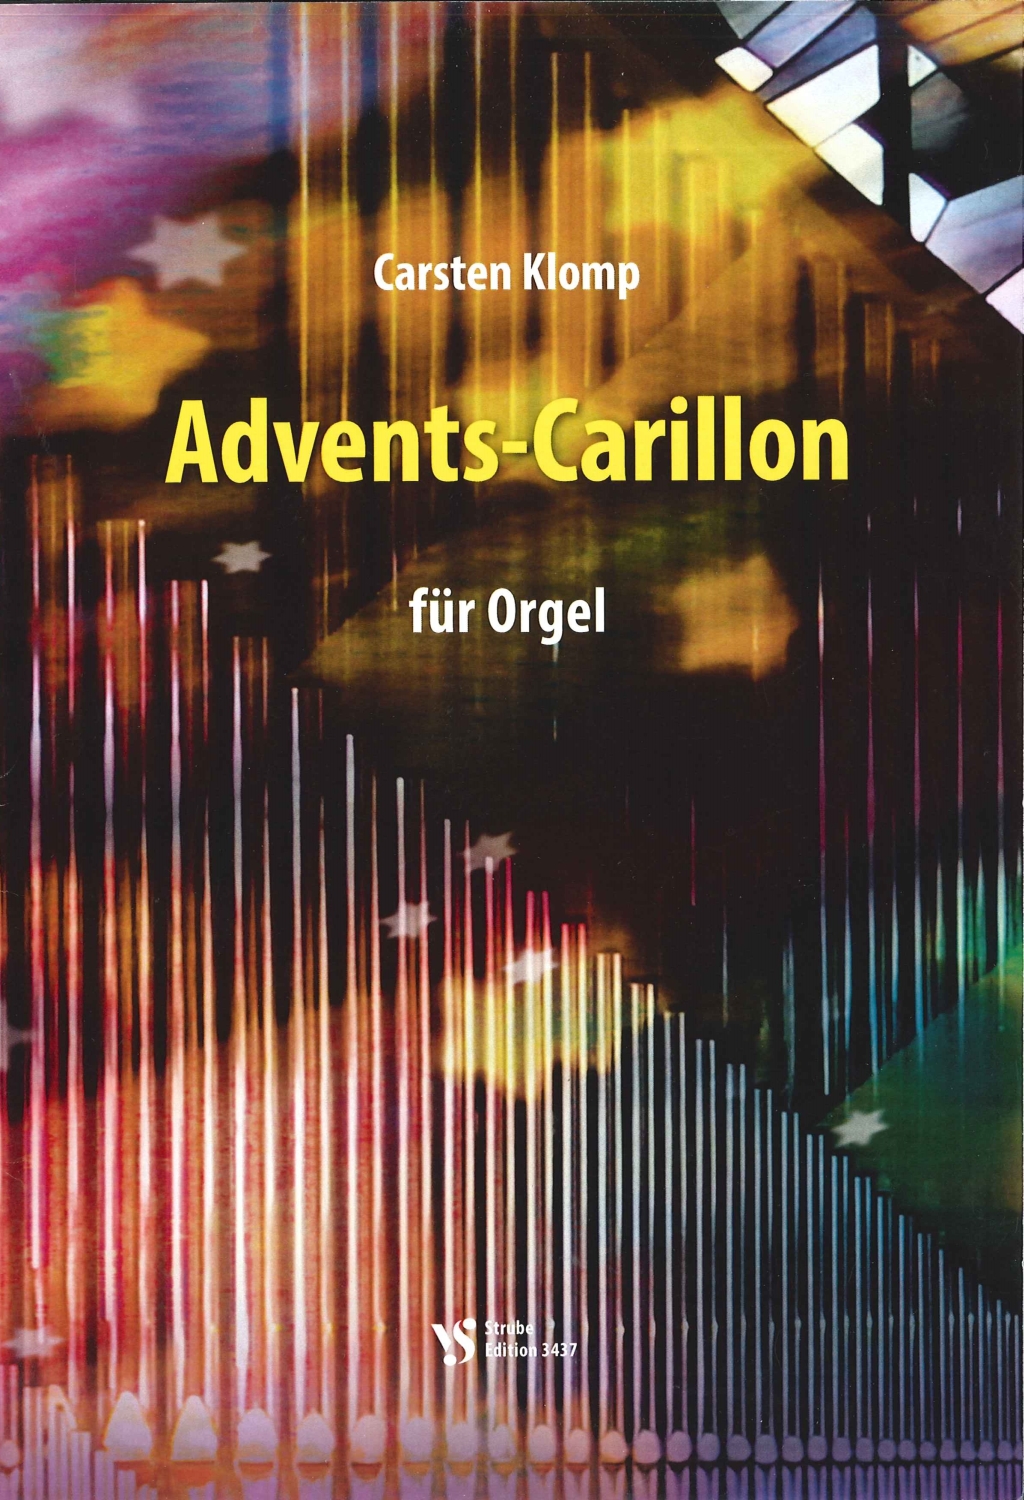 Carsten-Klomp-Advents-Carillon-_0001.JPG